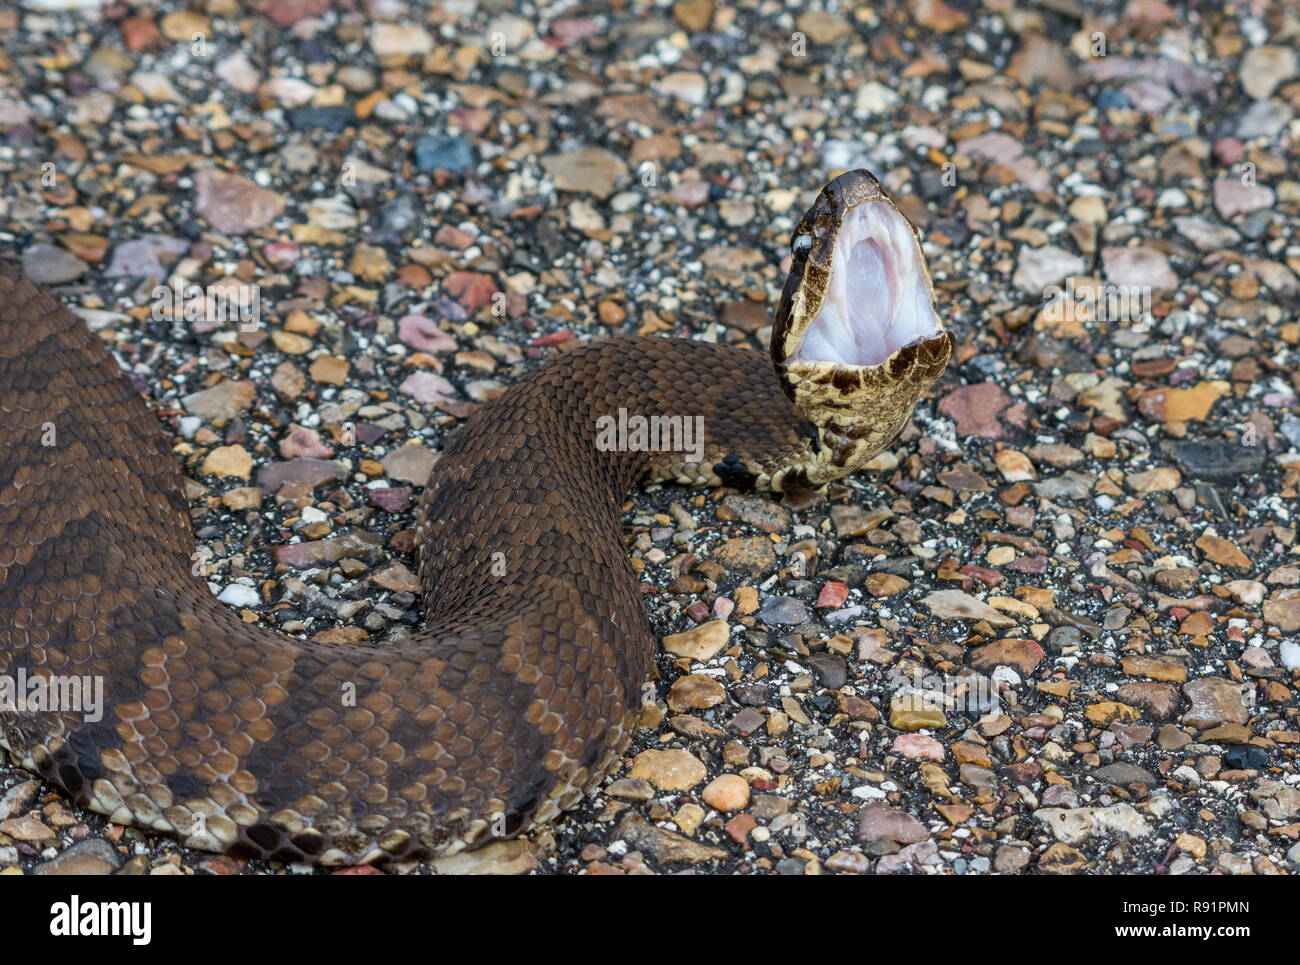 Cottonmouth snake (Agkistrodon piscivorus), eine giftige Bambusotter Aggression zeigt. Aransas National Wildlife Refuge, Texas, USA. Stockfoto